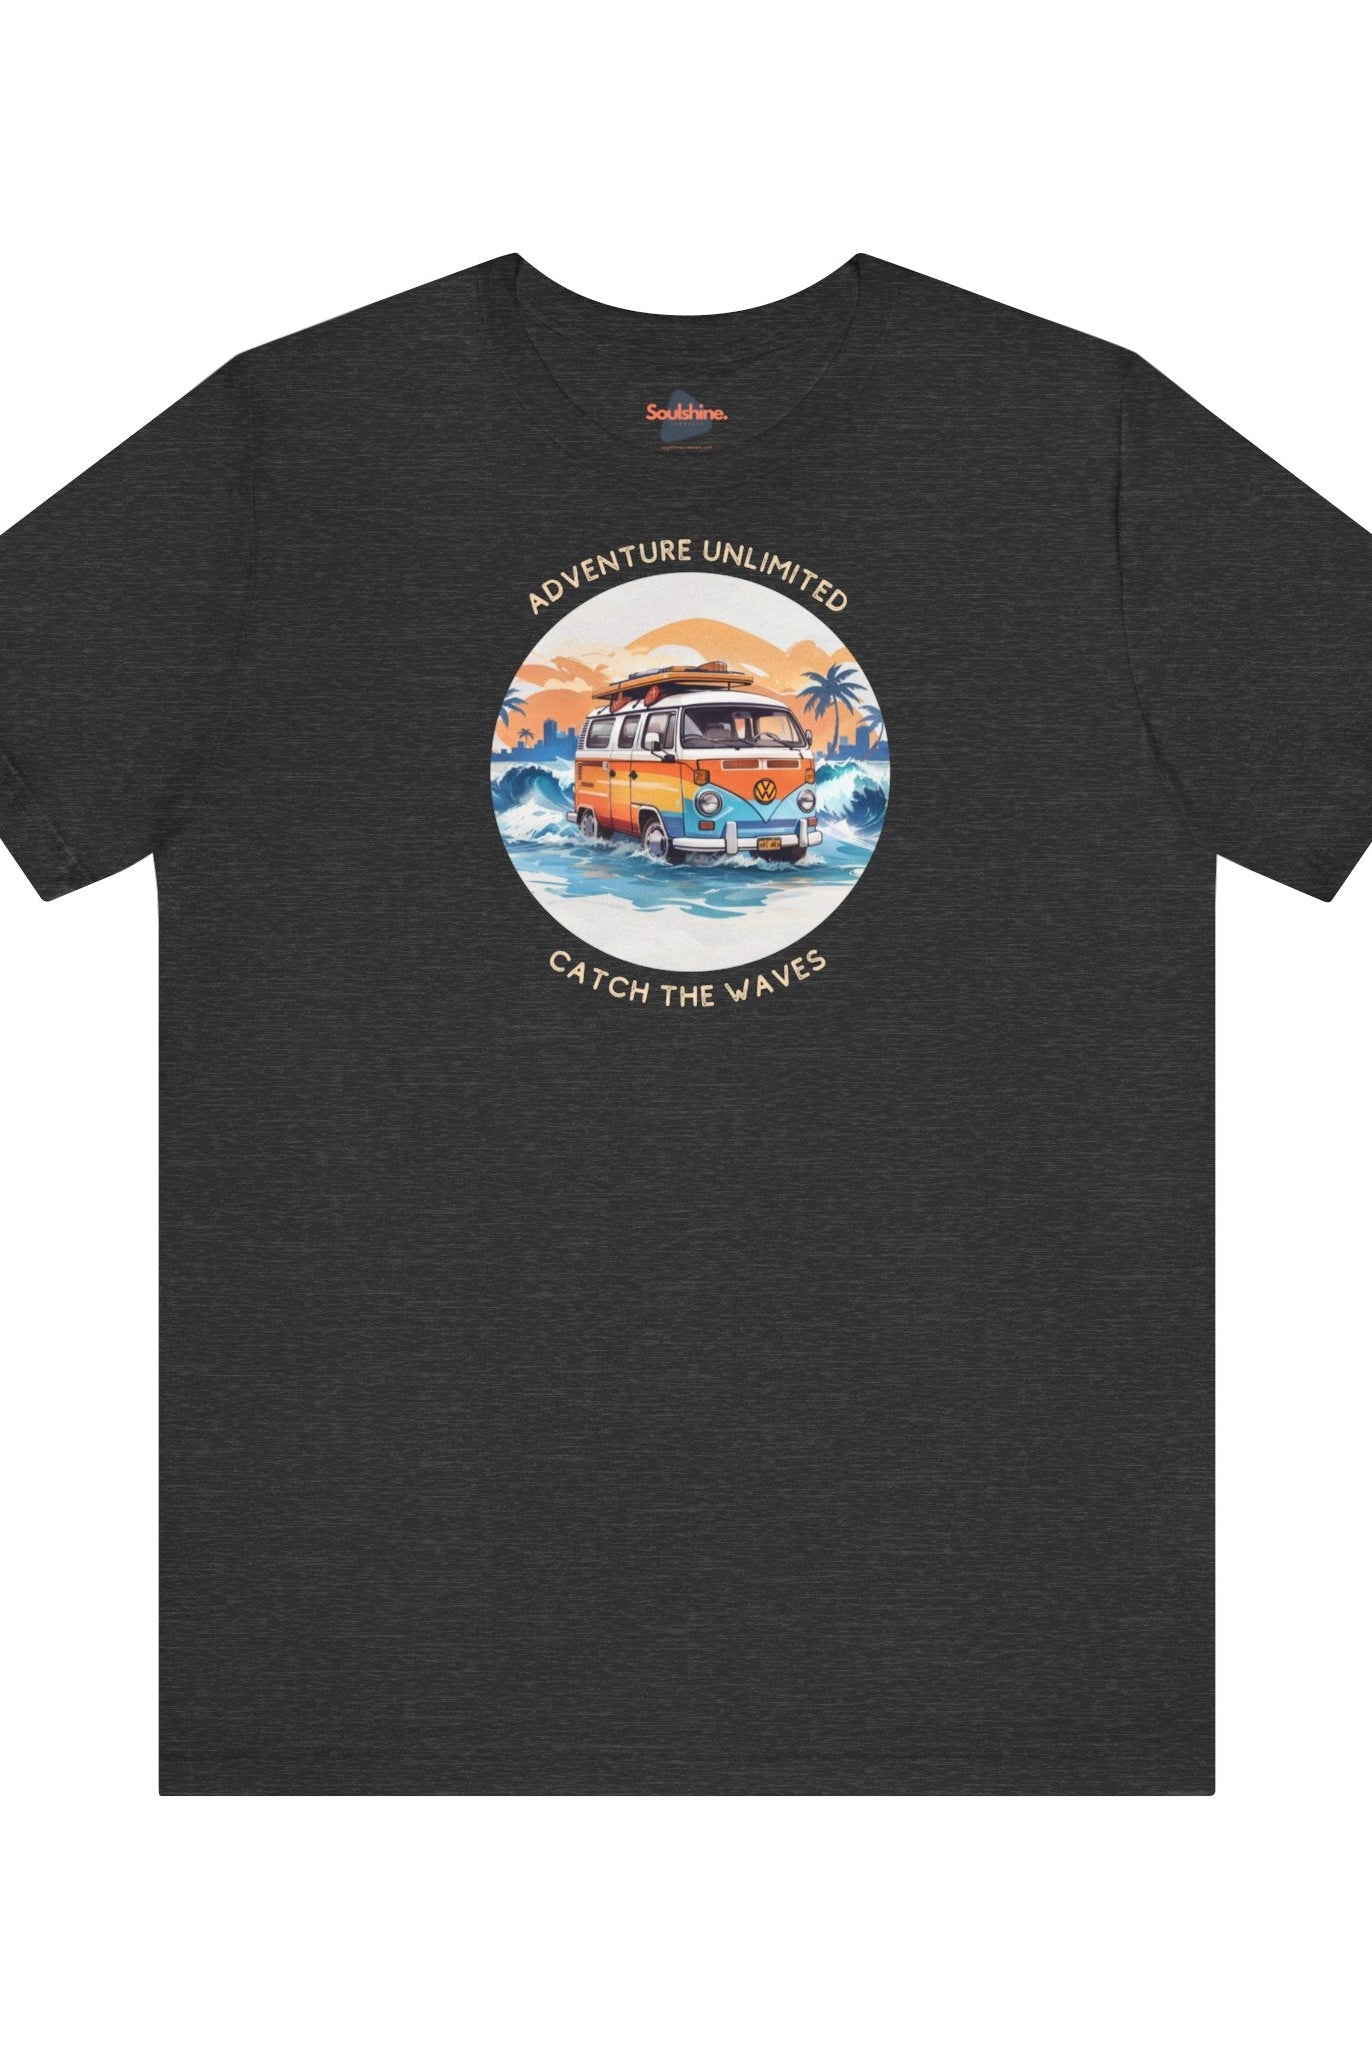 Adventure Unlimited Surfing T-Shirt - Black direct-to-garment printed item - Soulshinecreators